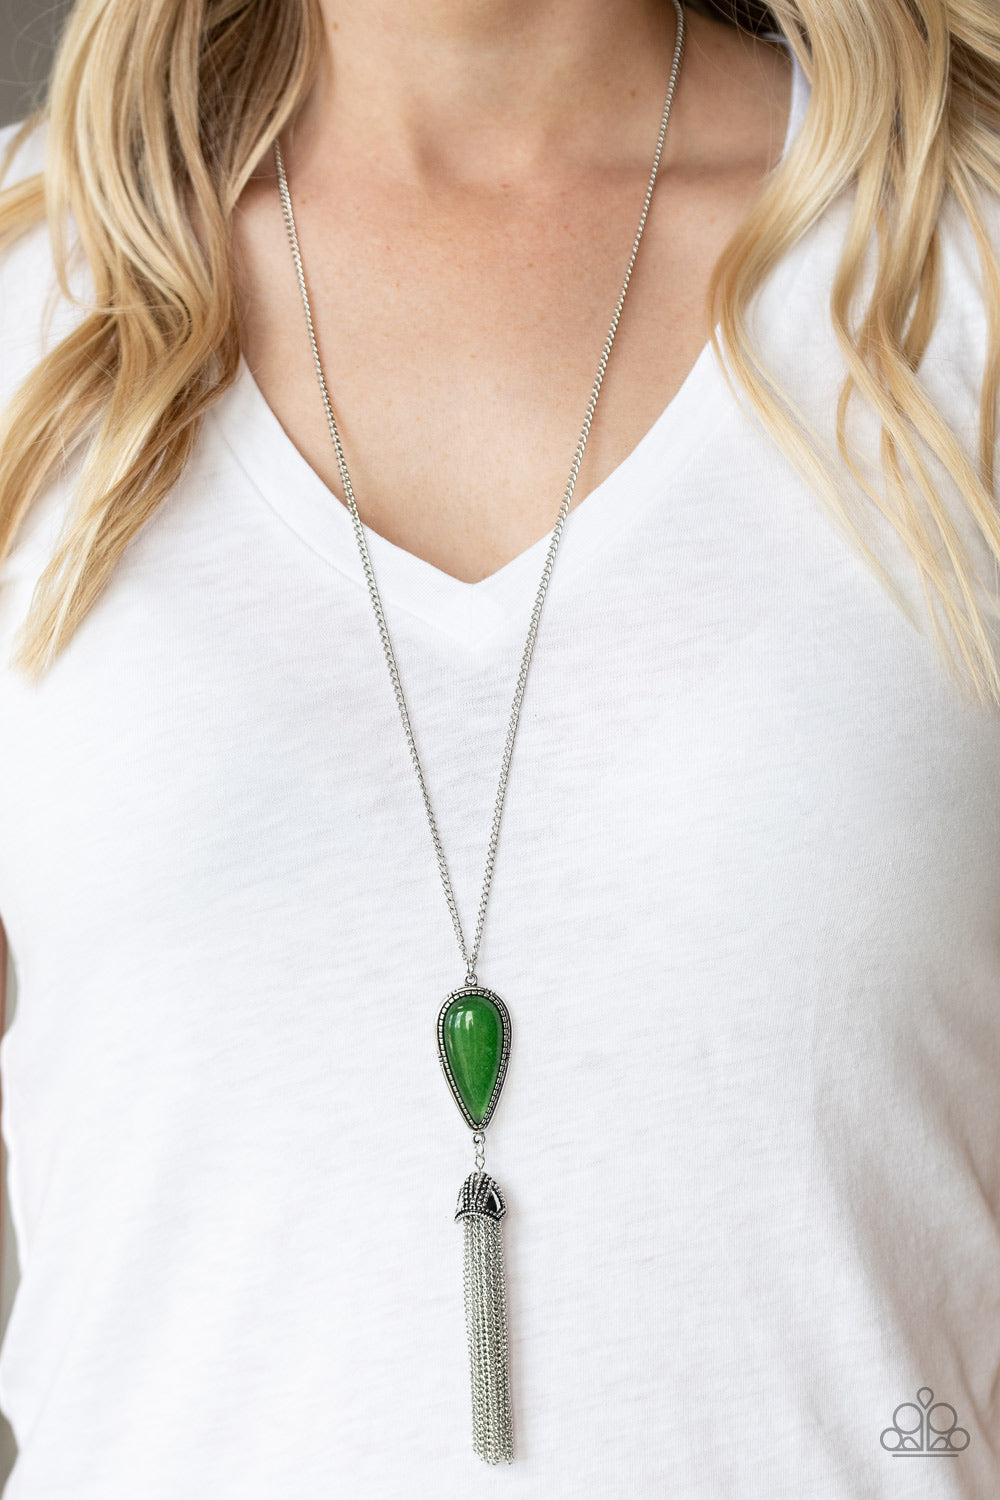 Paparazzi Accessories - Zen Generation - Green Necklace